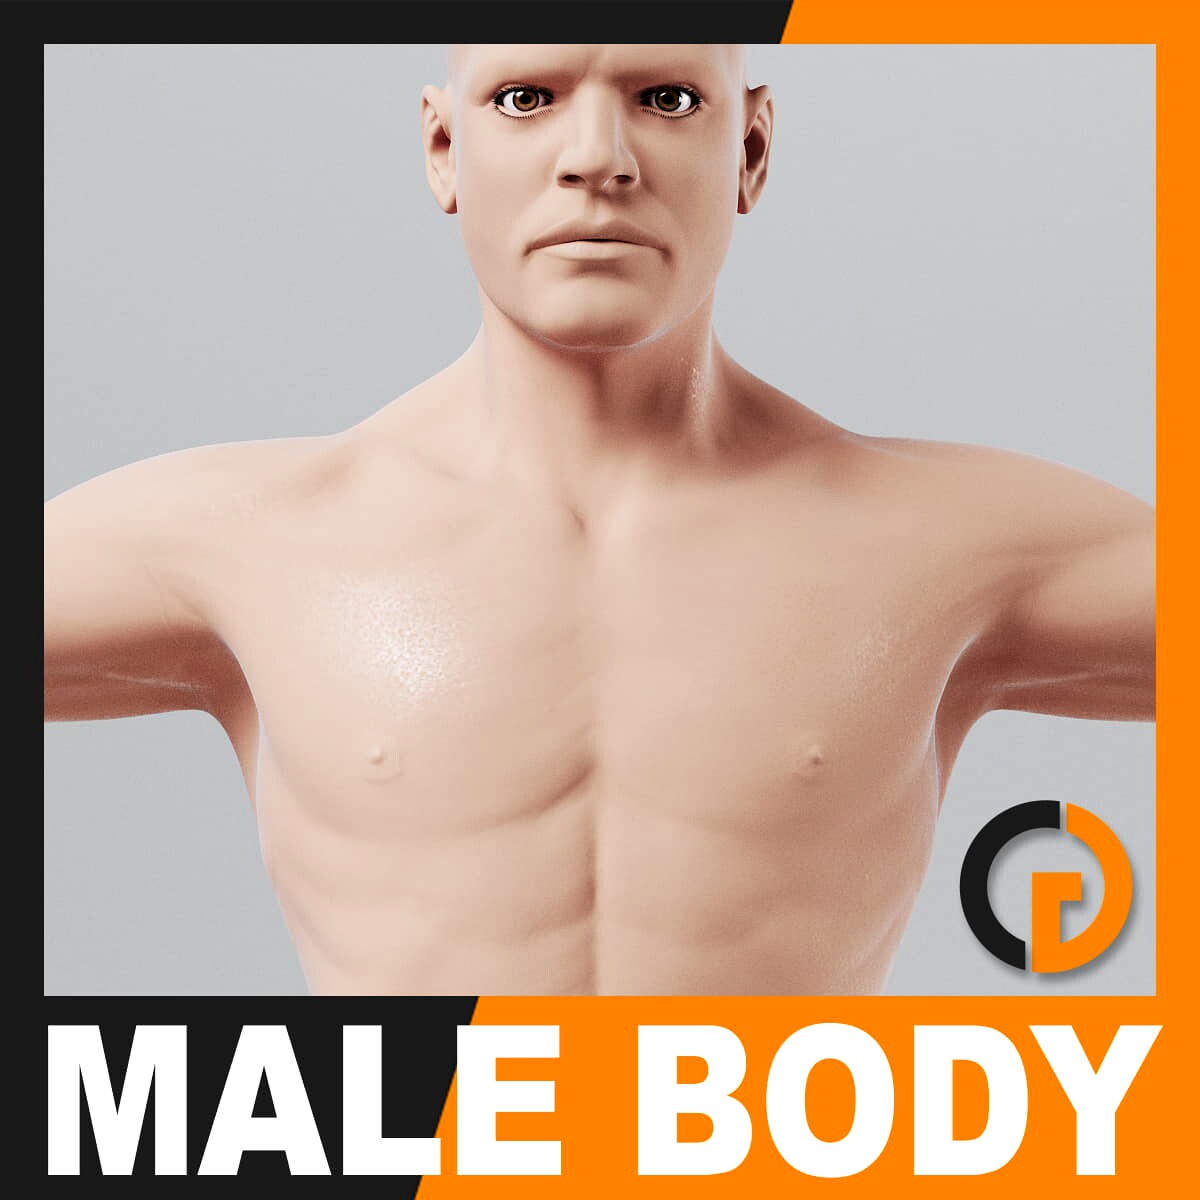 Human Male Body - Anatomy